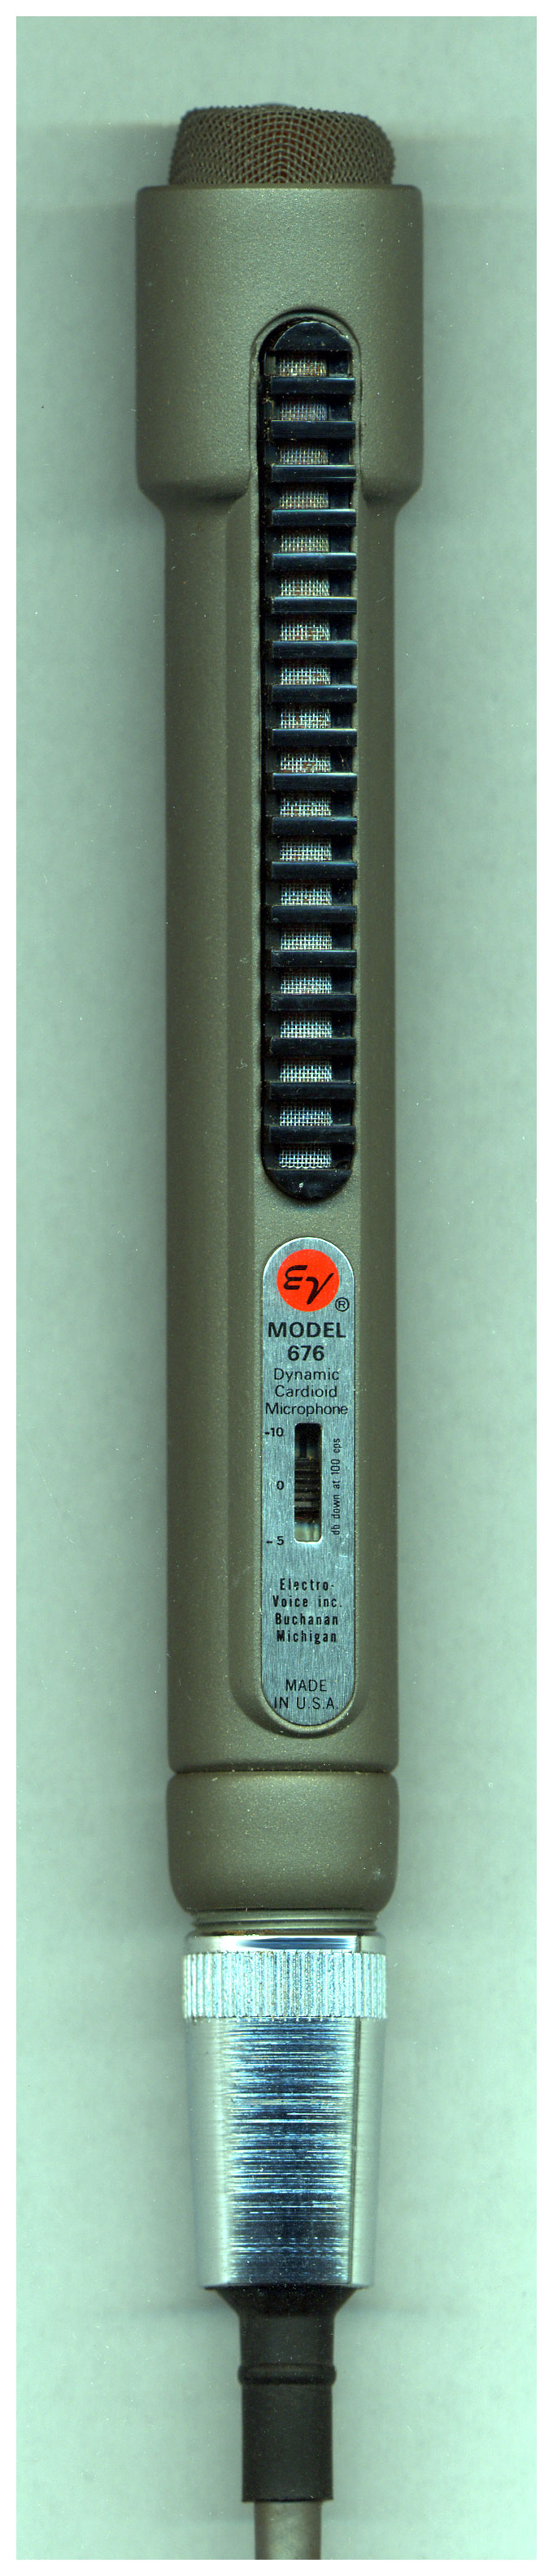 The Electro-Voice Model 676